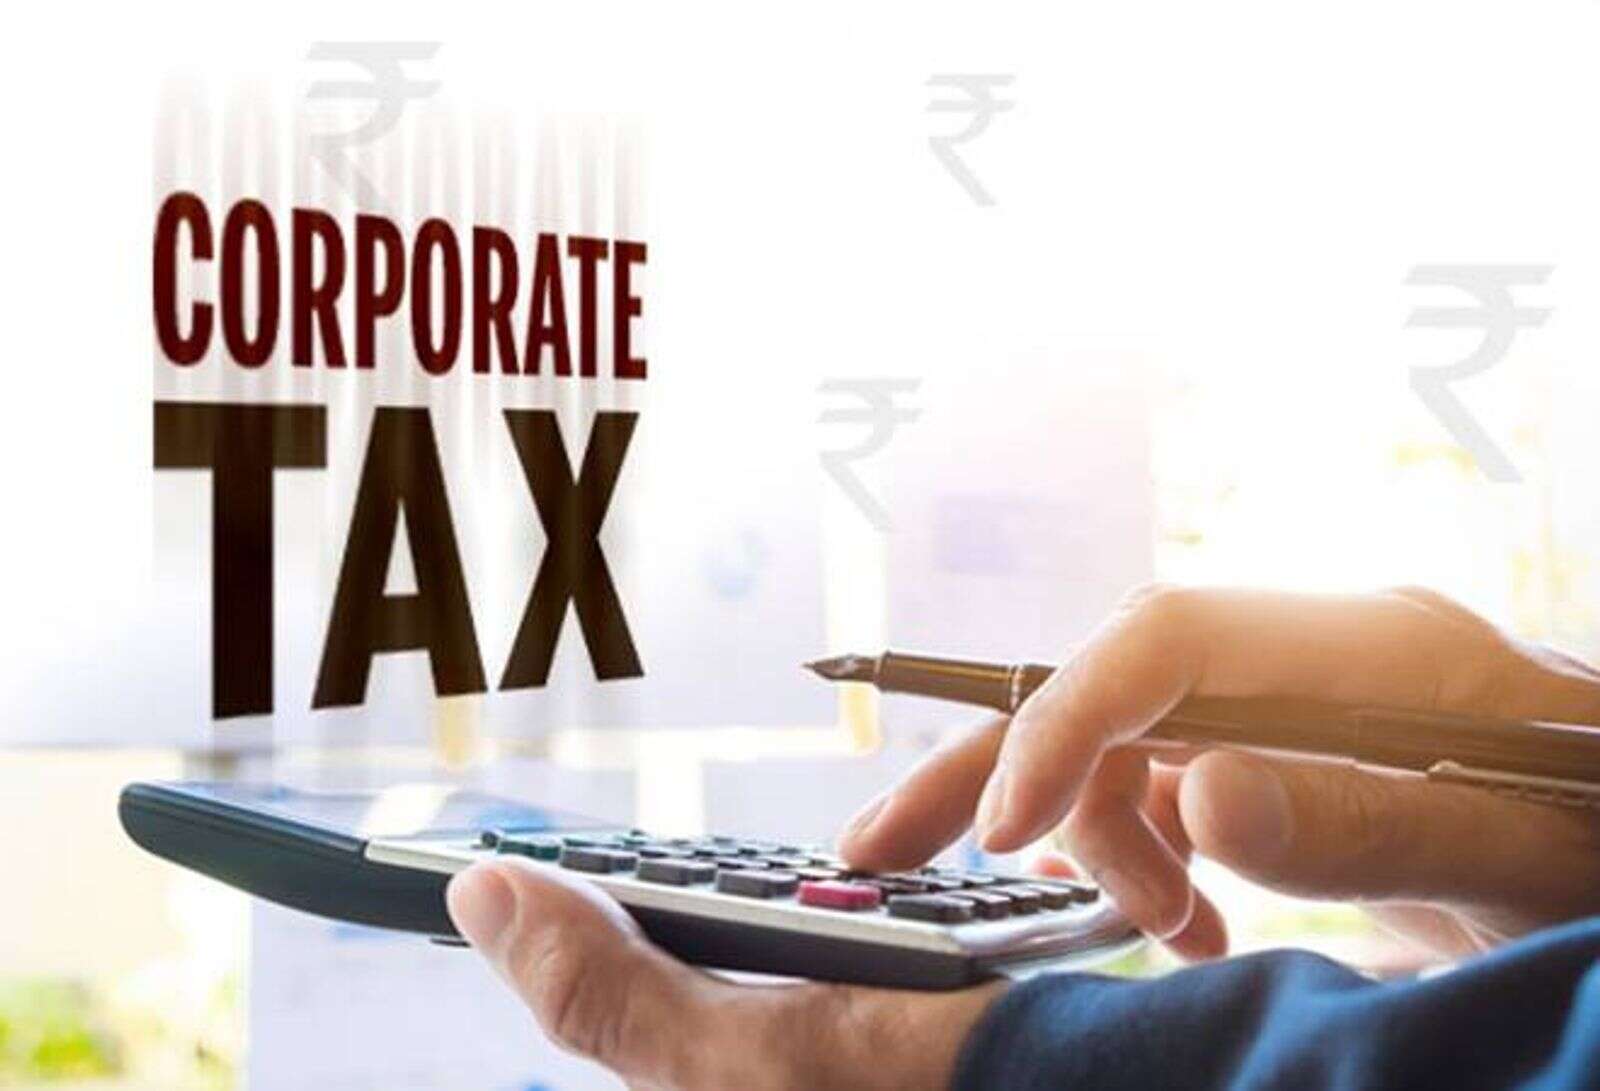 Uae taxes. Corporate Tax. Corporate Tax UAE. Налог на прибыль. Налоговая система ОАЭ.